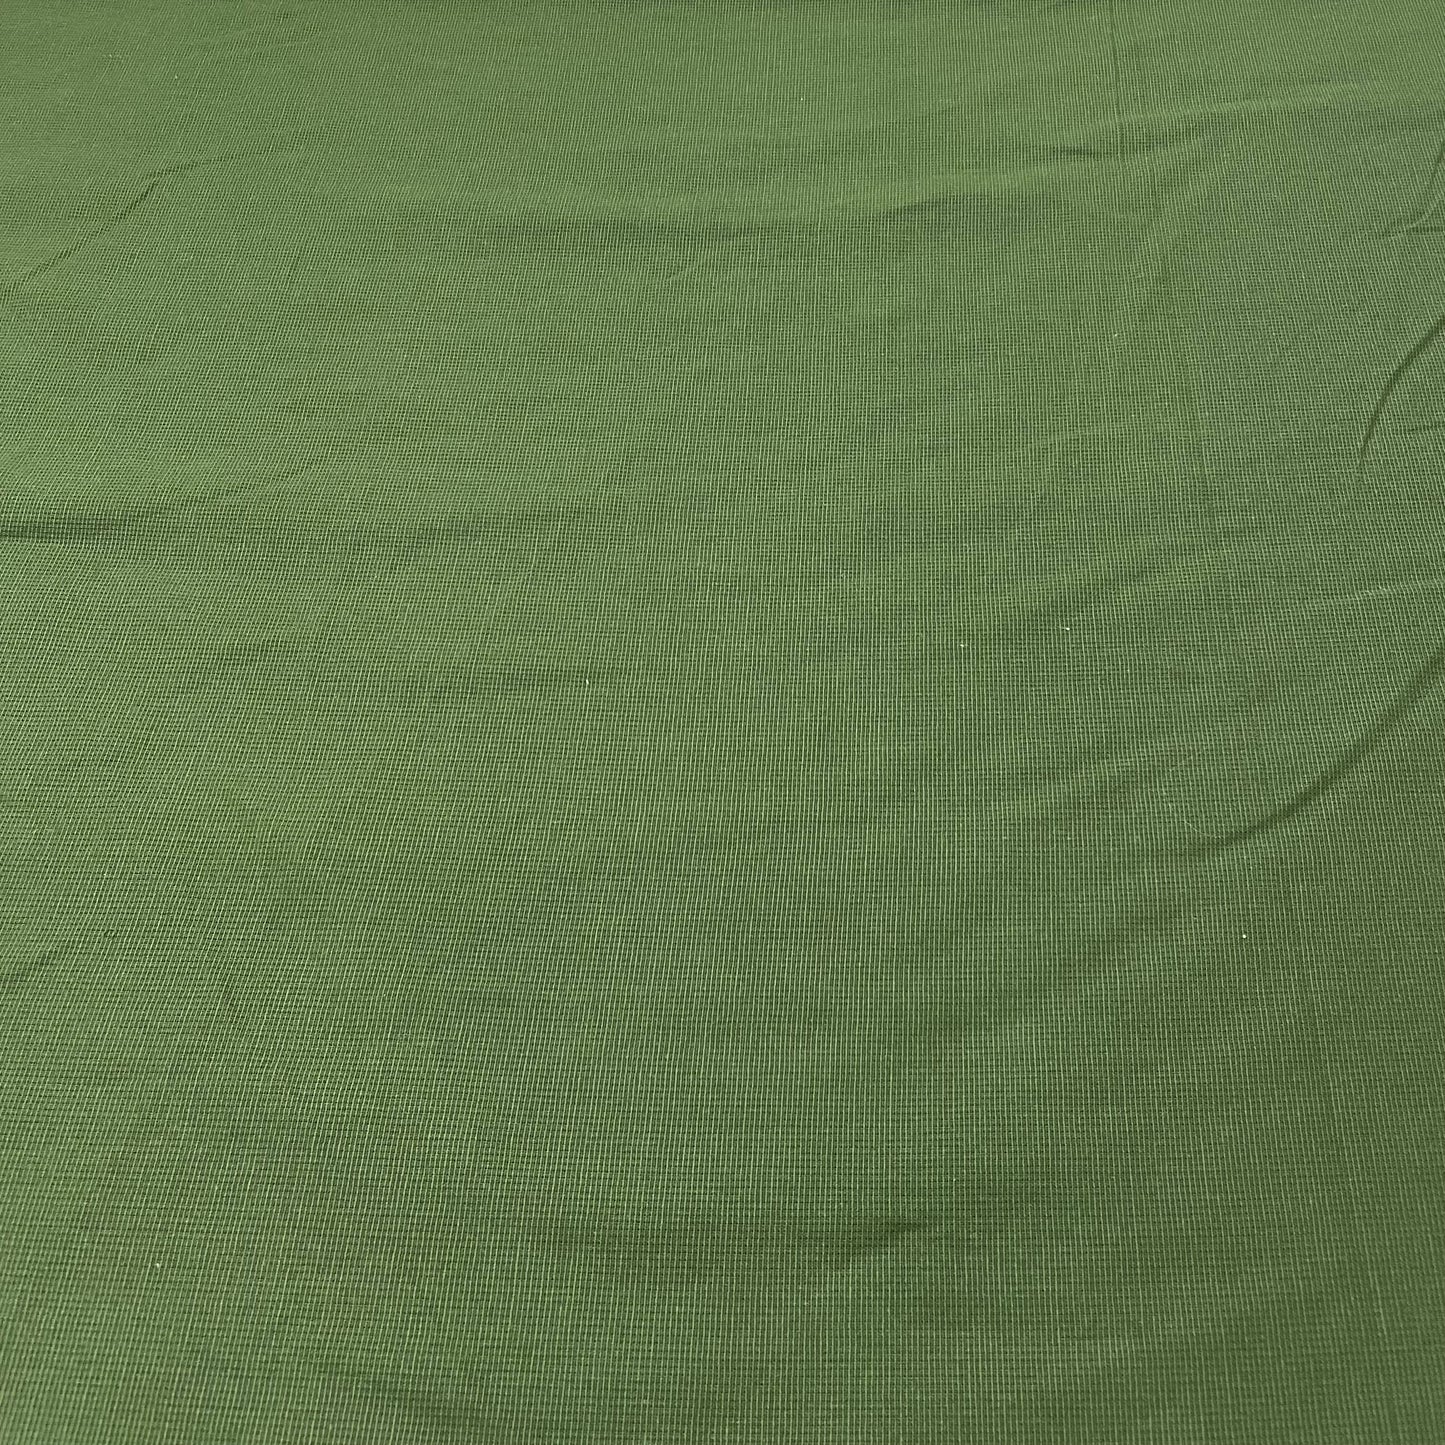 Green Solid Cotton Matty Fabric